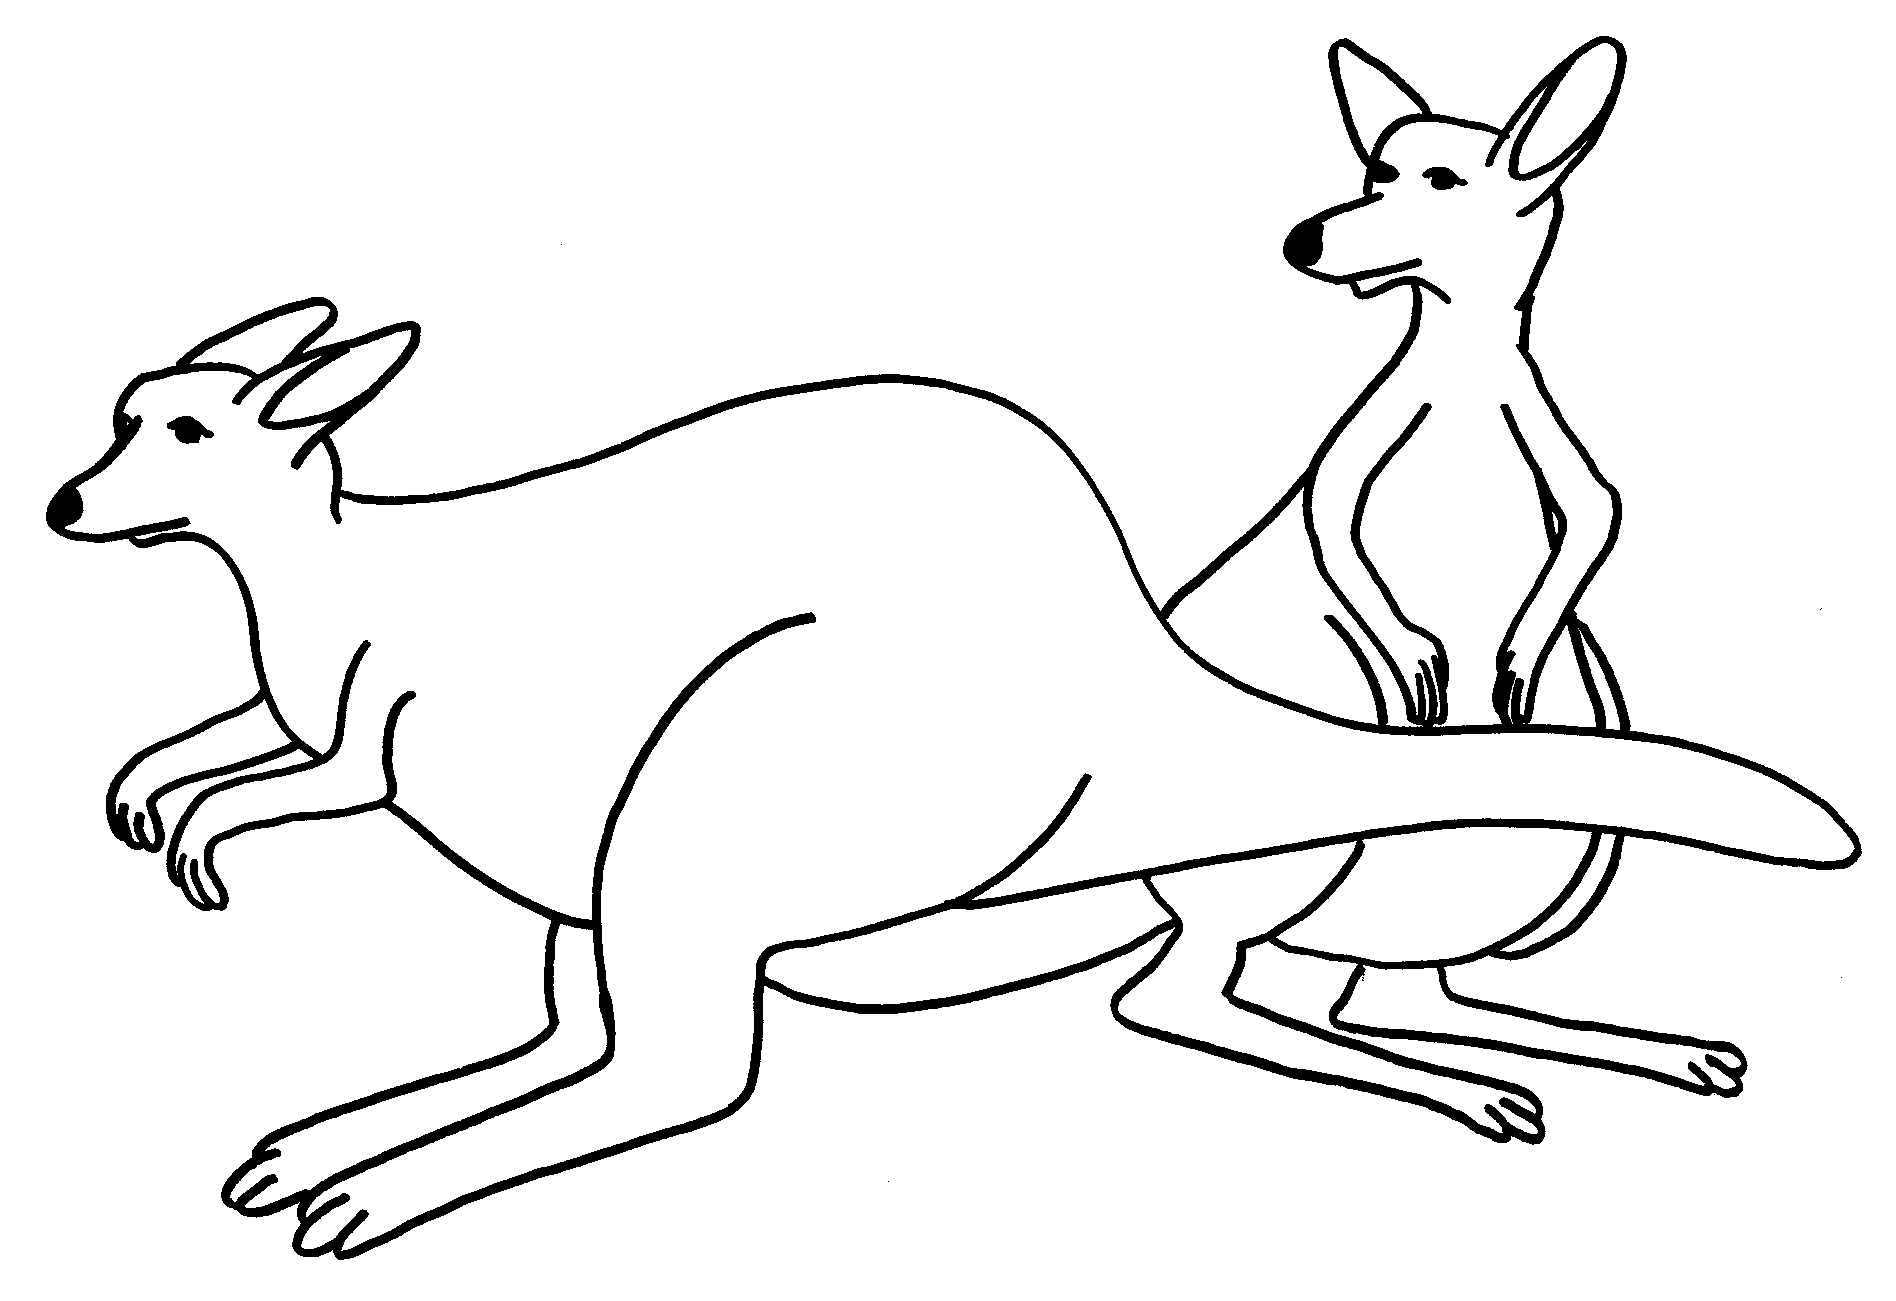 Coloring page: Kangaroo (Animals) #9163 - Free Printable Coloring Pages